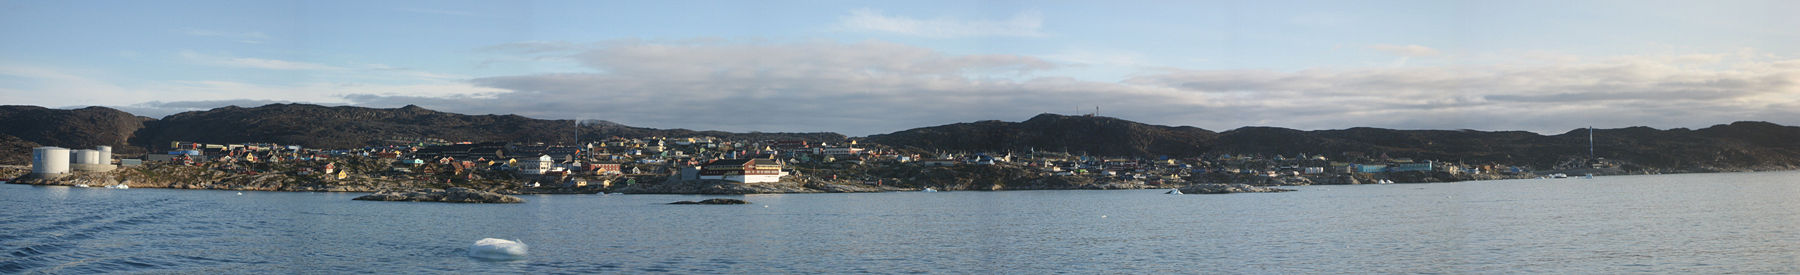 Панорама Илулиссата, 2006 год